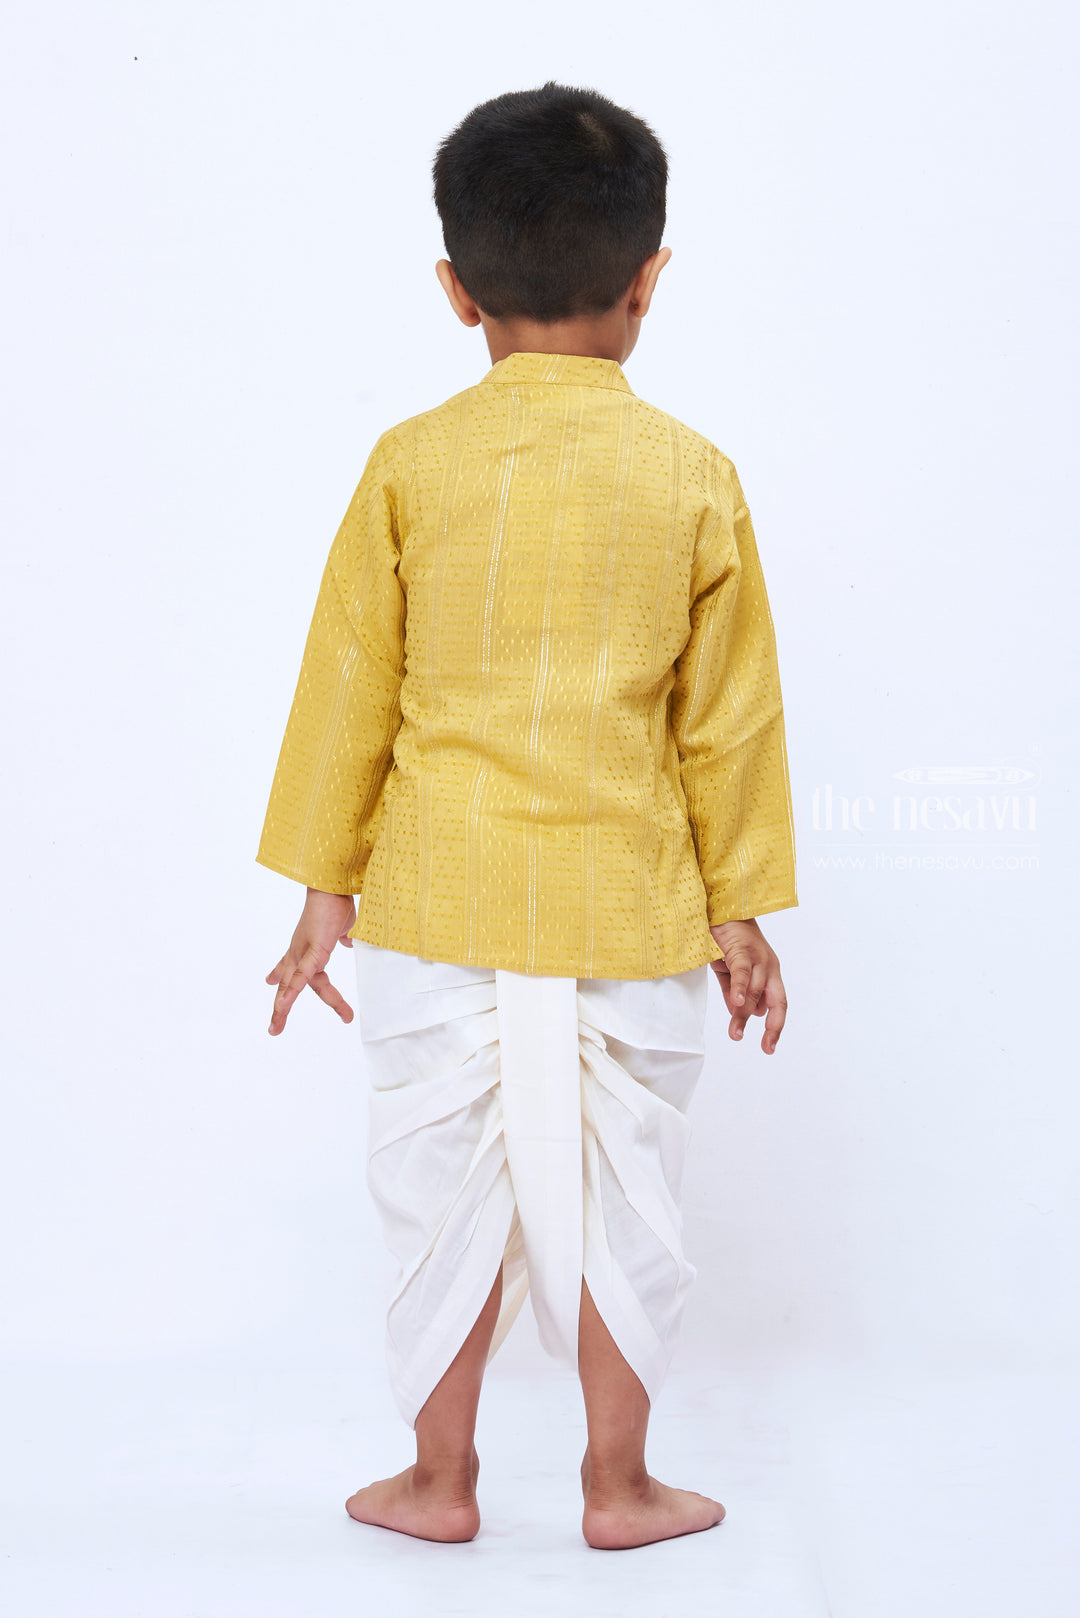 The Nesavu Boys Dothi Set Vibrant Yellow Kurta with White Dhoti Set Infant Boys Party Dress Nesavu Boys Yellow Kurta and White Dhoti Set | Festive Ethnic Wear | Bright Traditional Attire | The Nesavu